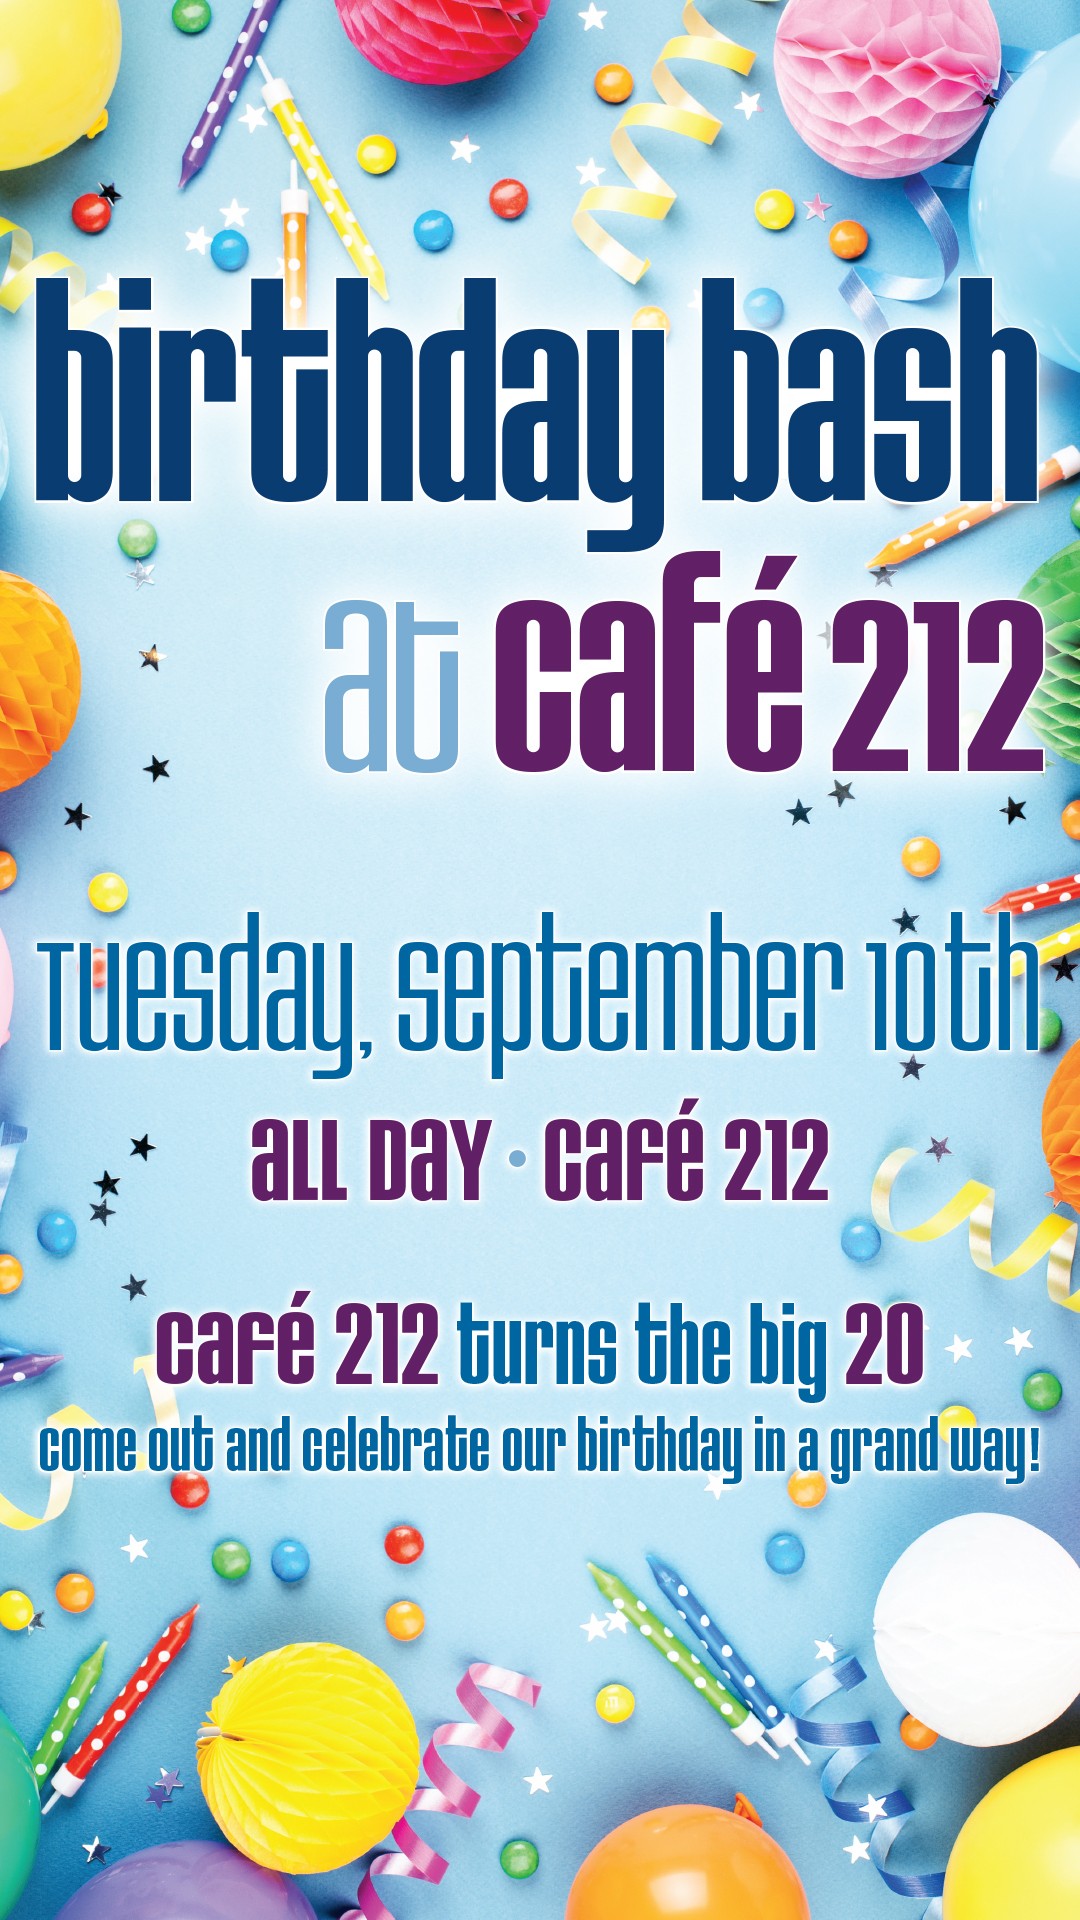 Birthday Bash at Cafe 212